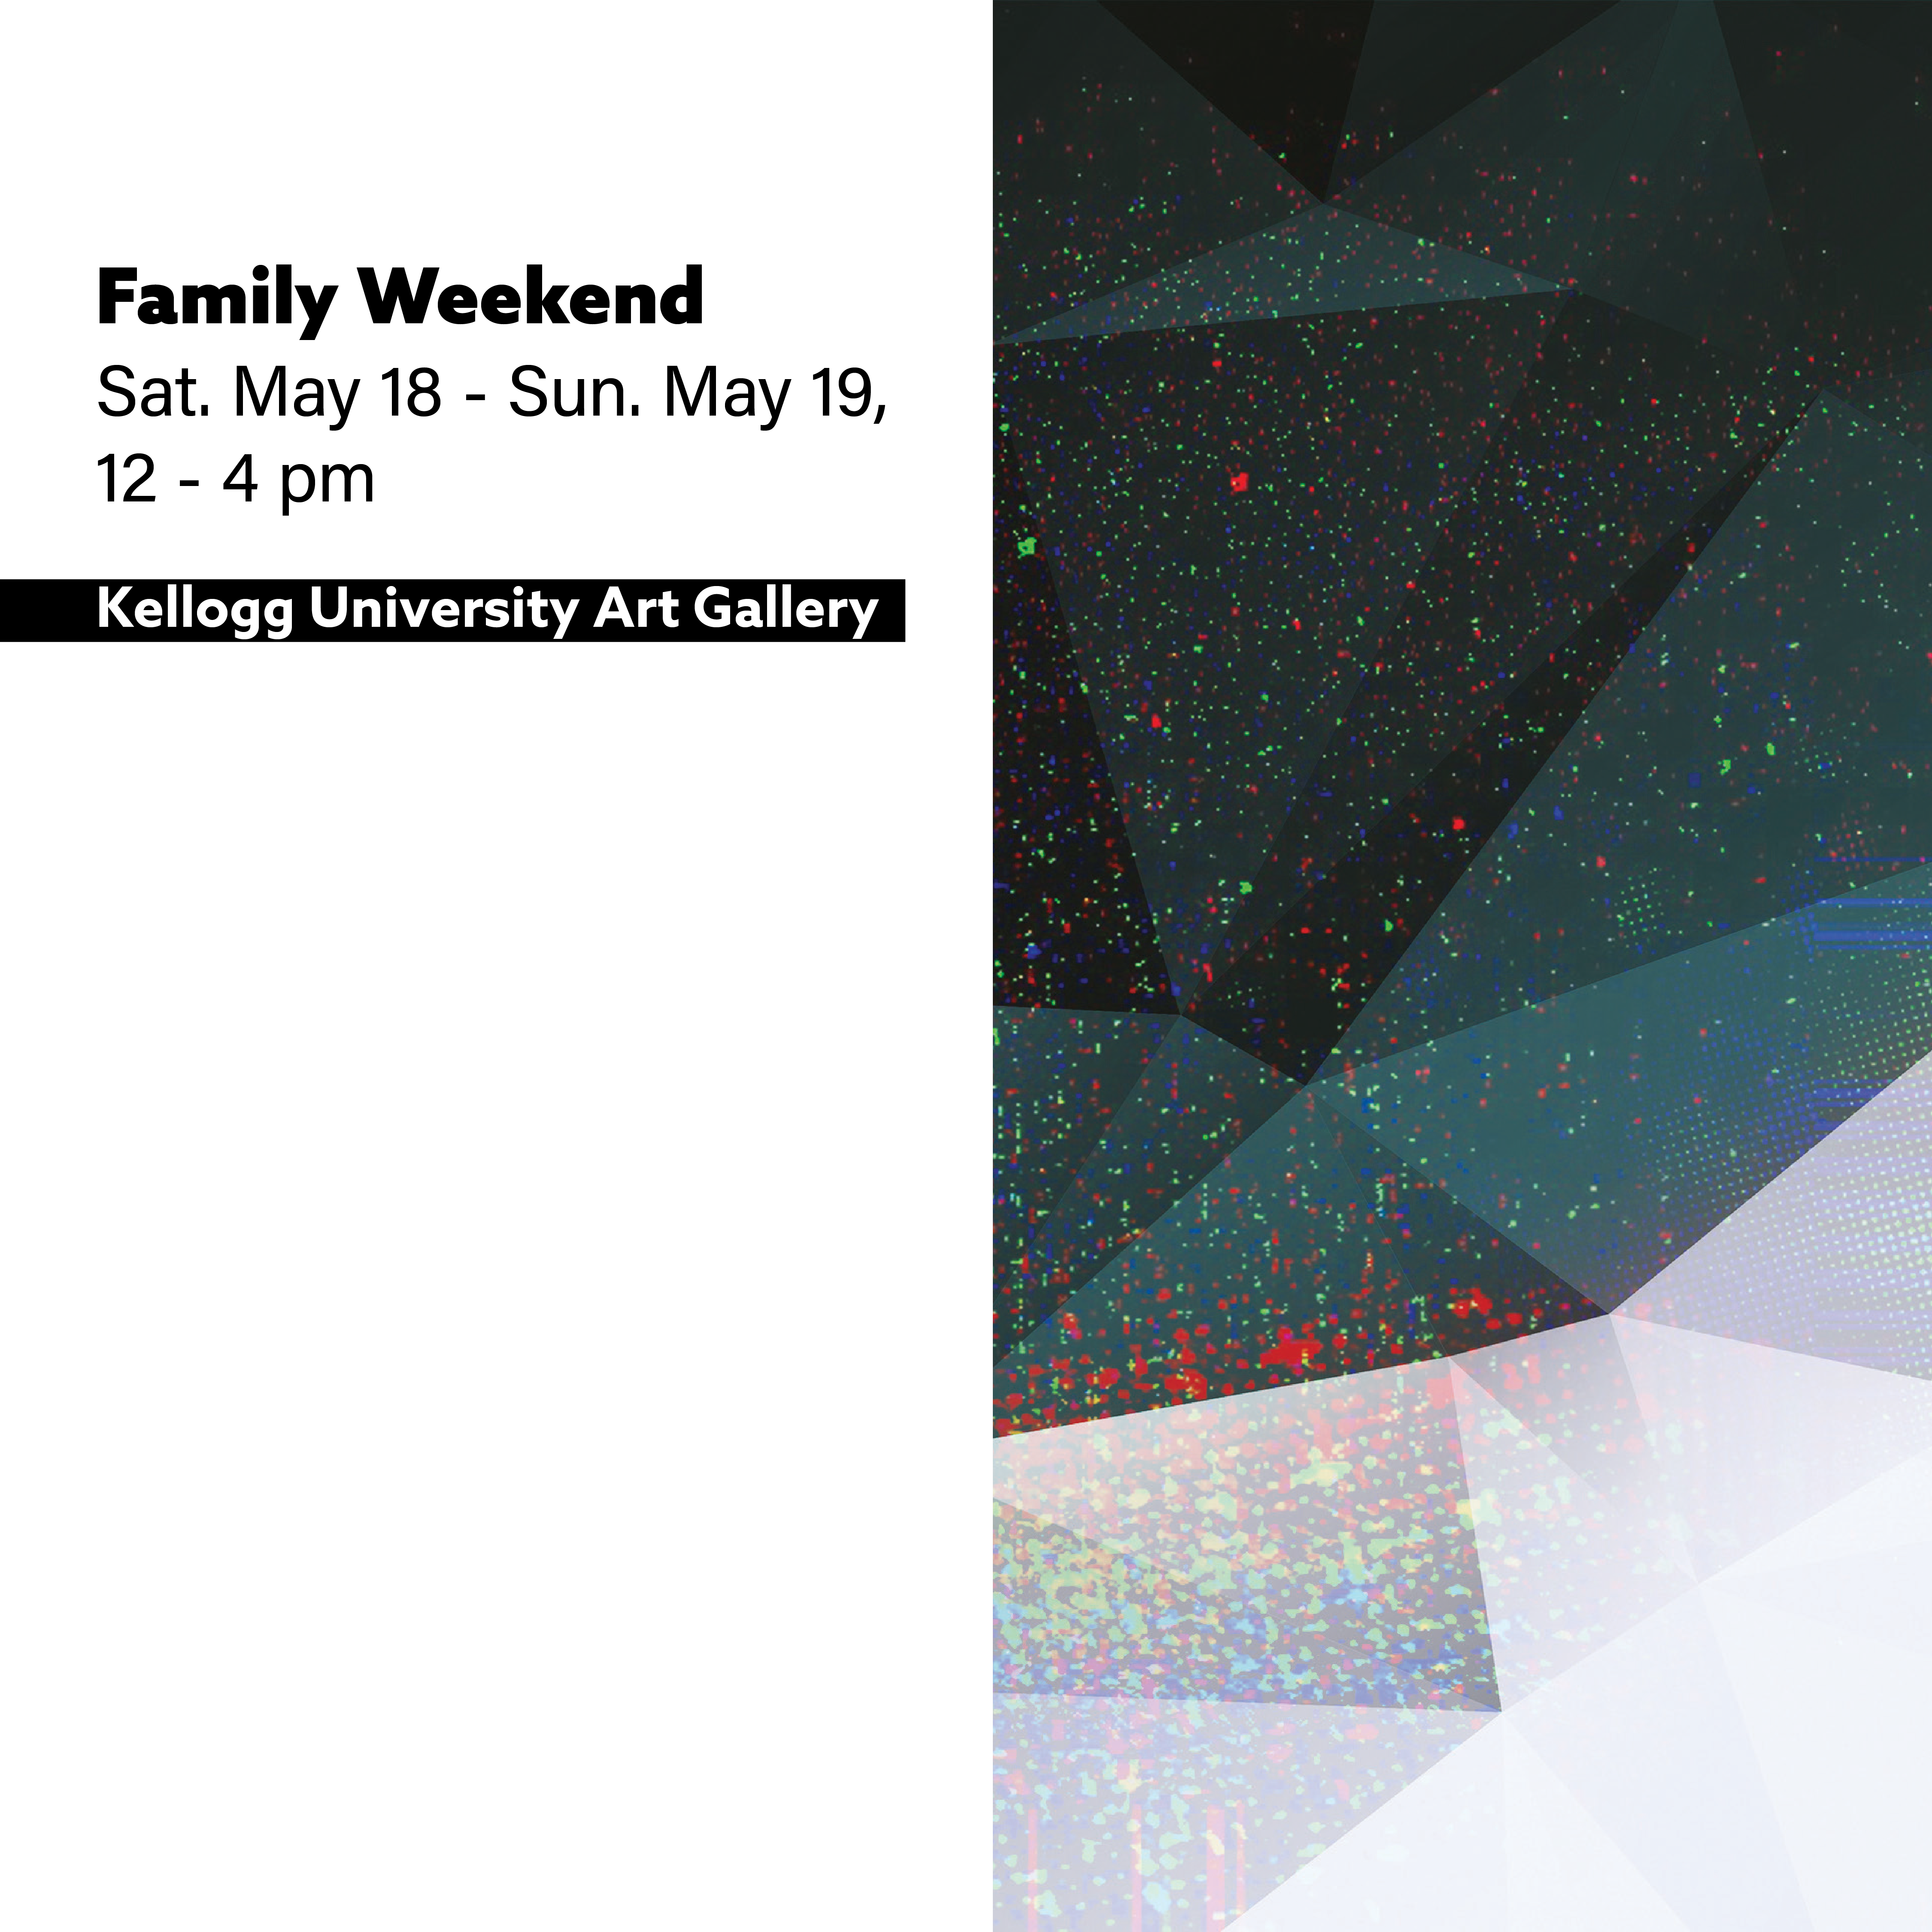 Family Weekend. Sat. May 18 - Sun May 19, 12- 4 pm. Kellogg University Art Gallery